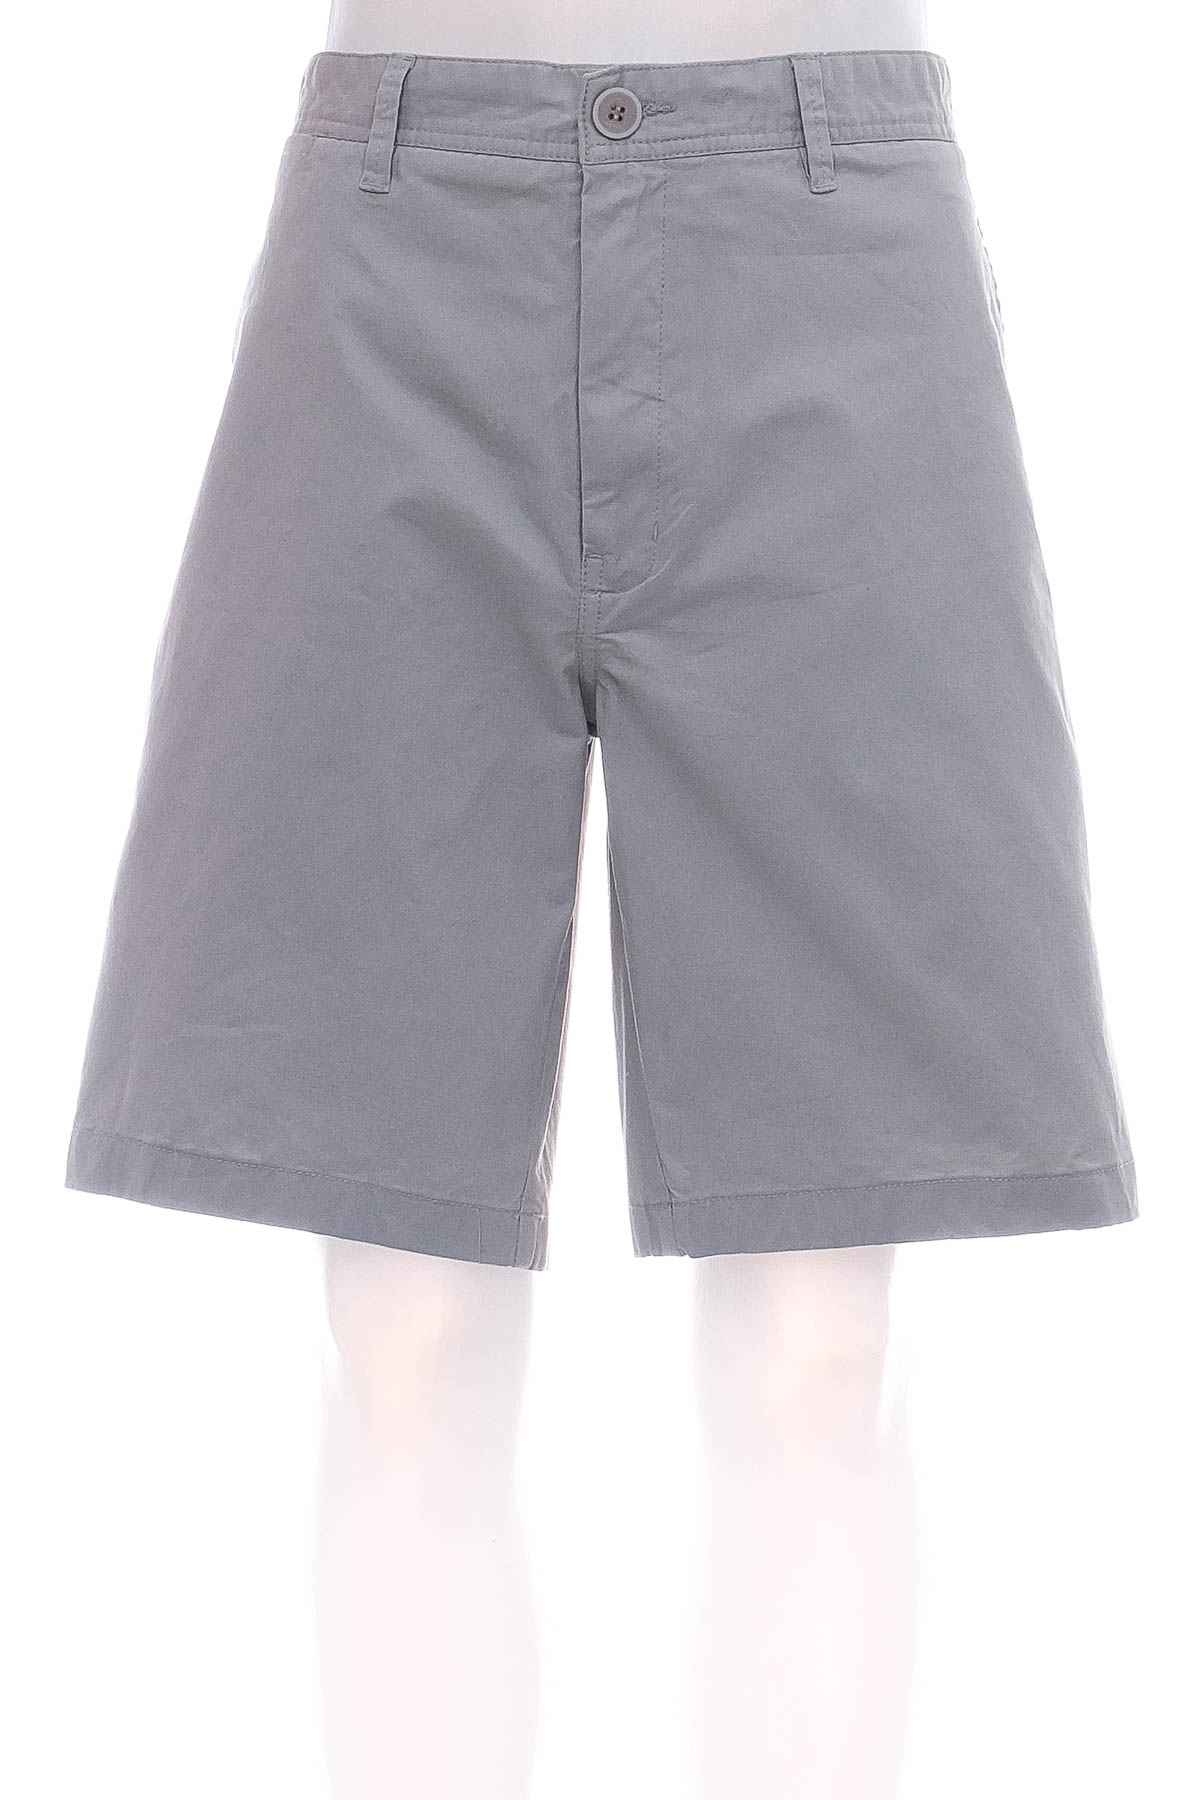 Men's shorts - TRENERY - 0